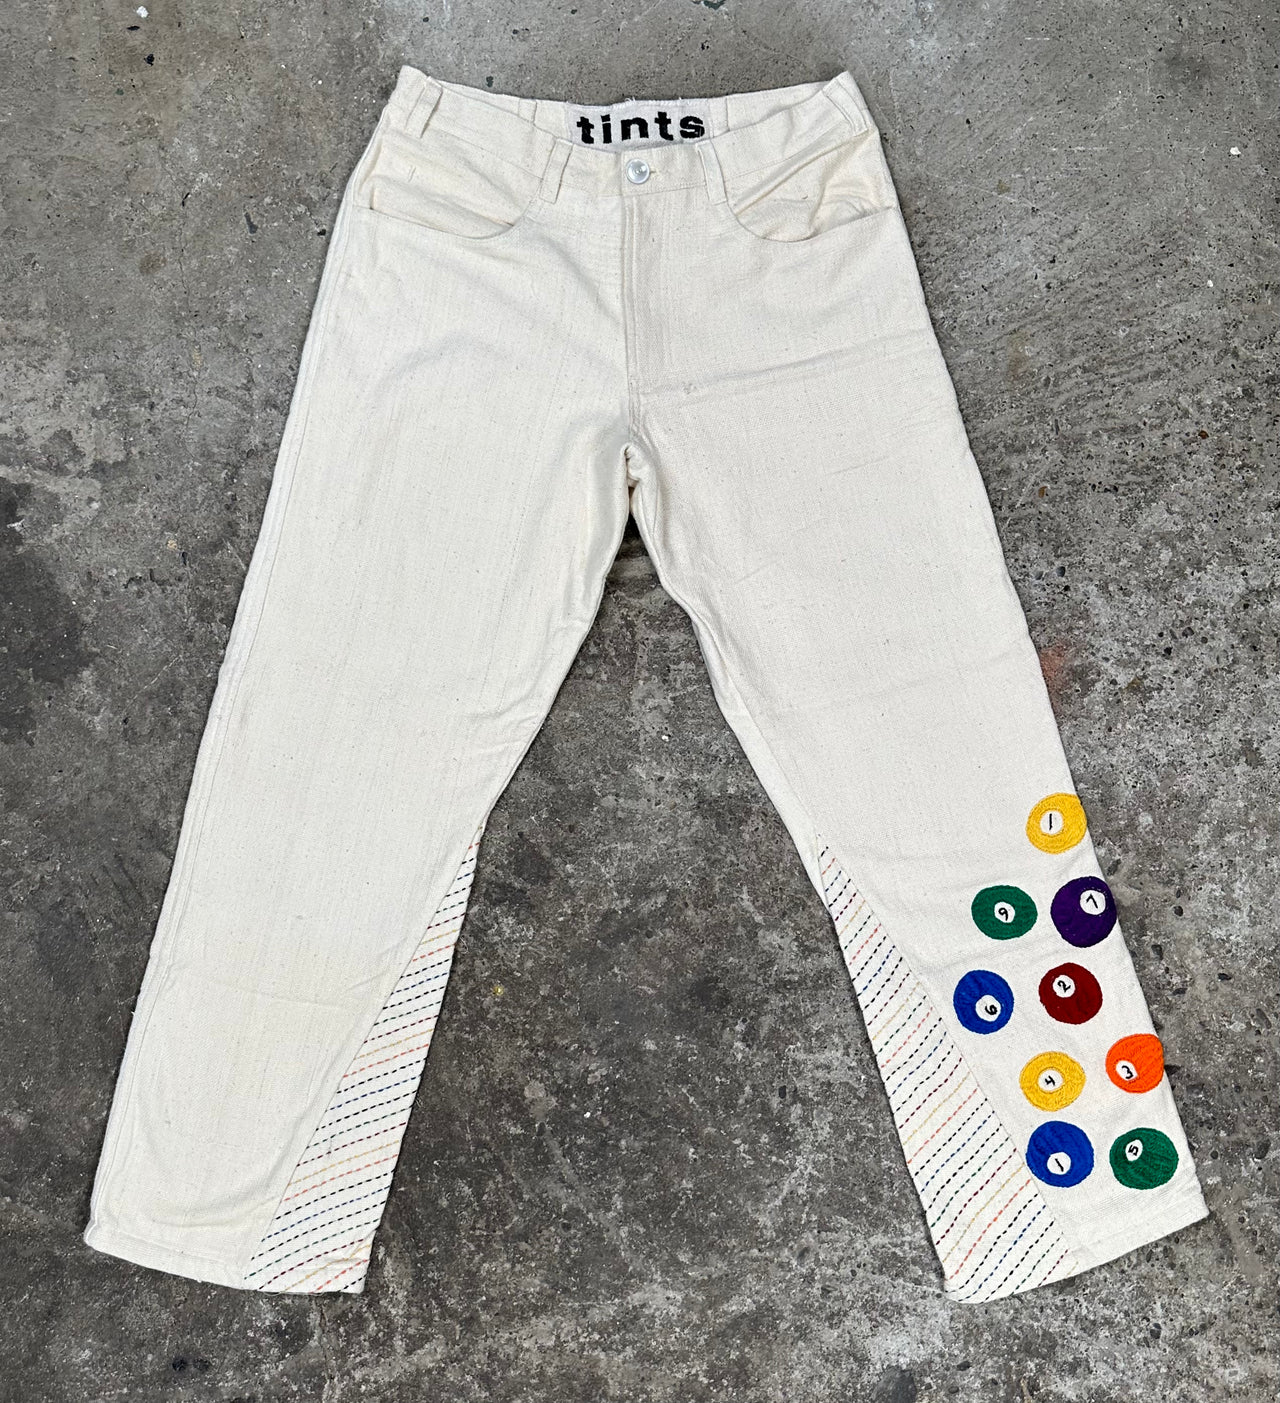 billiard balls organic cotton pants with running stitch